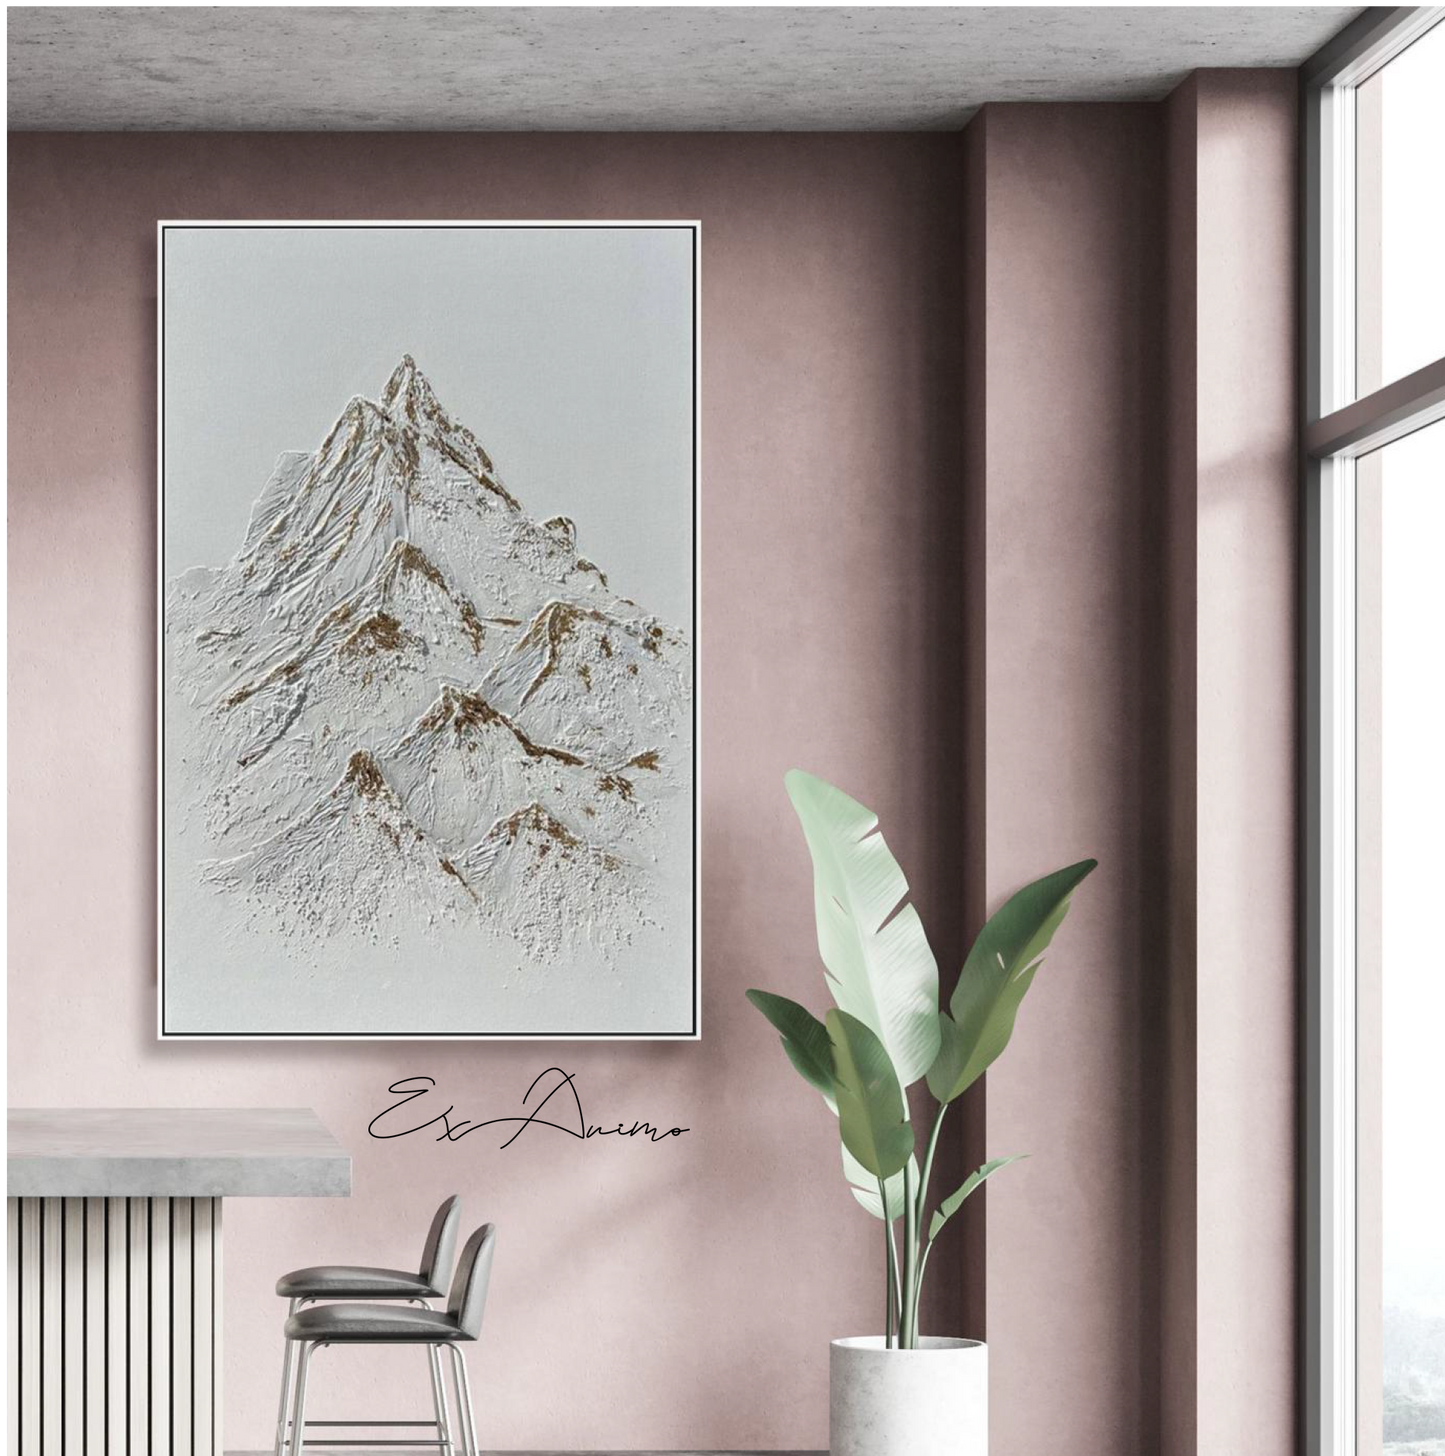 Ex Animo Designs - Mountain Minimalist Oil Painting Art